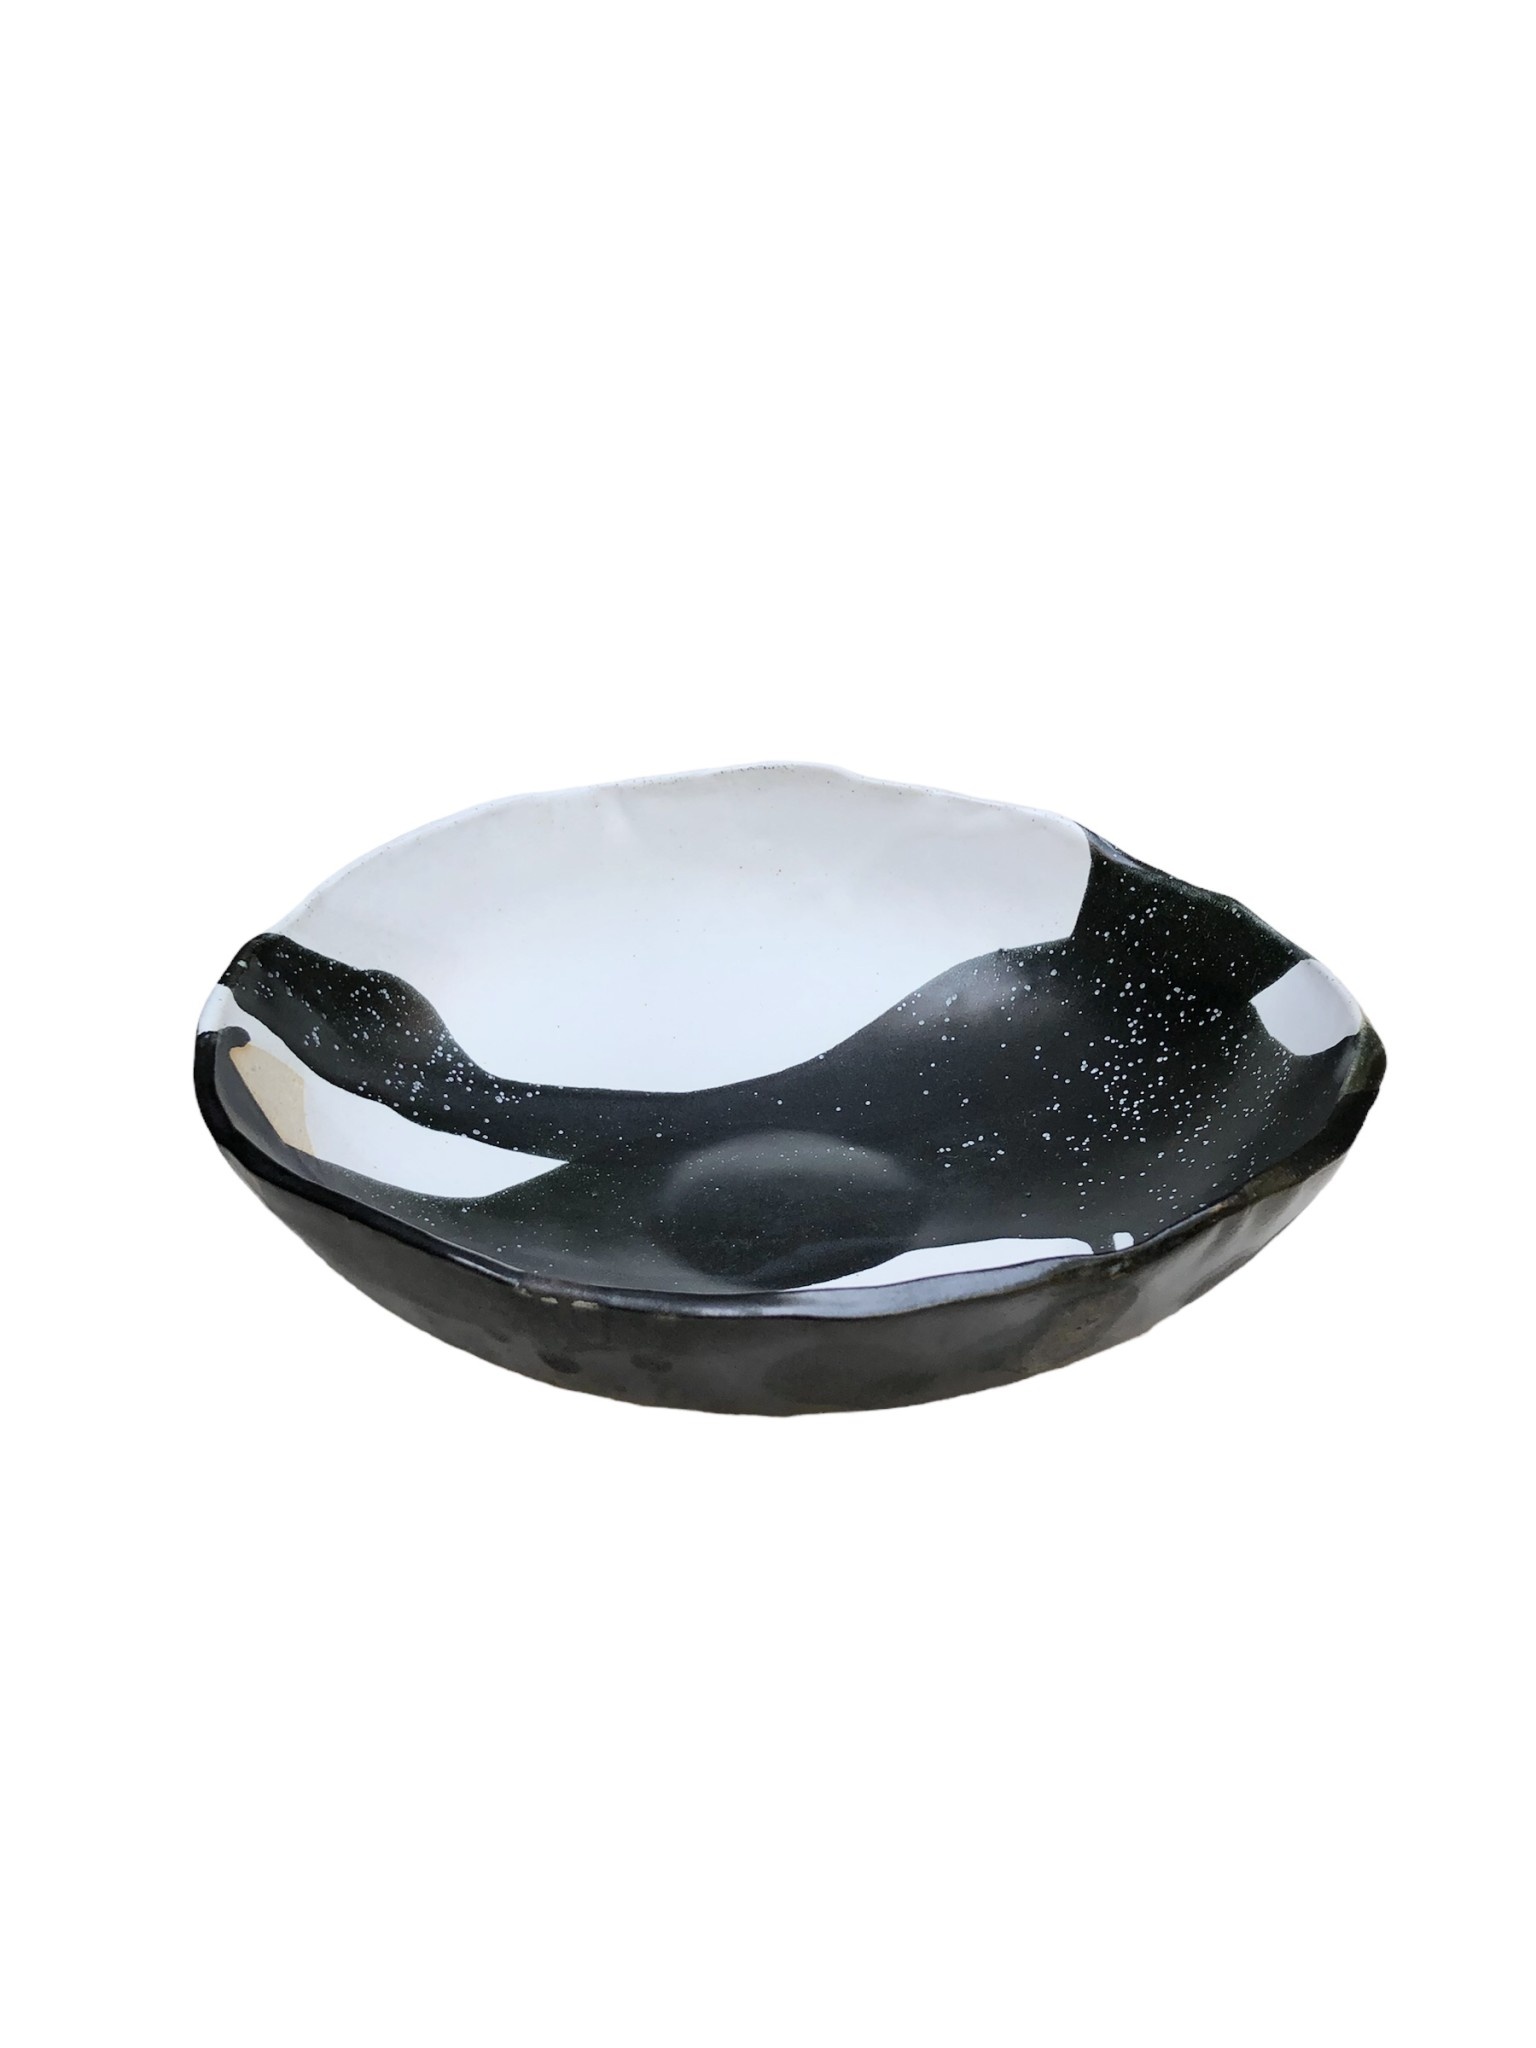 Linda Bretherton - Black/White Large Serving Bowl #2 - Stoneware - 9x28x31cm-1